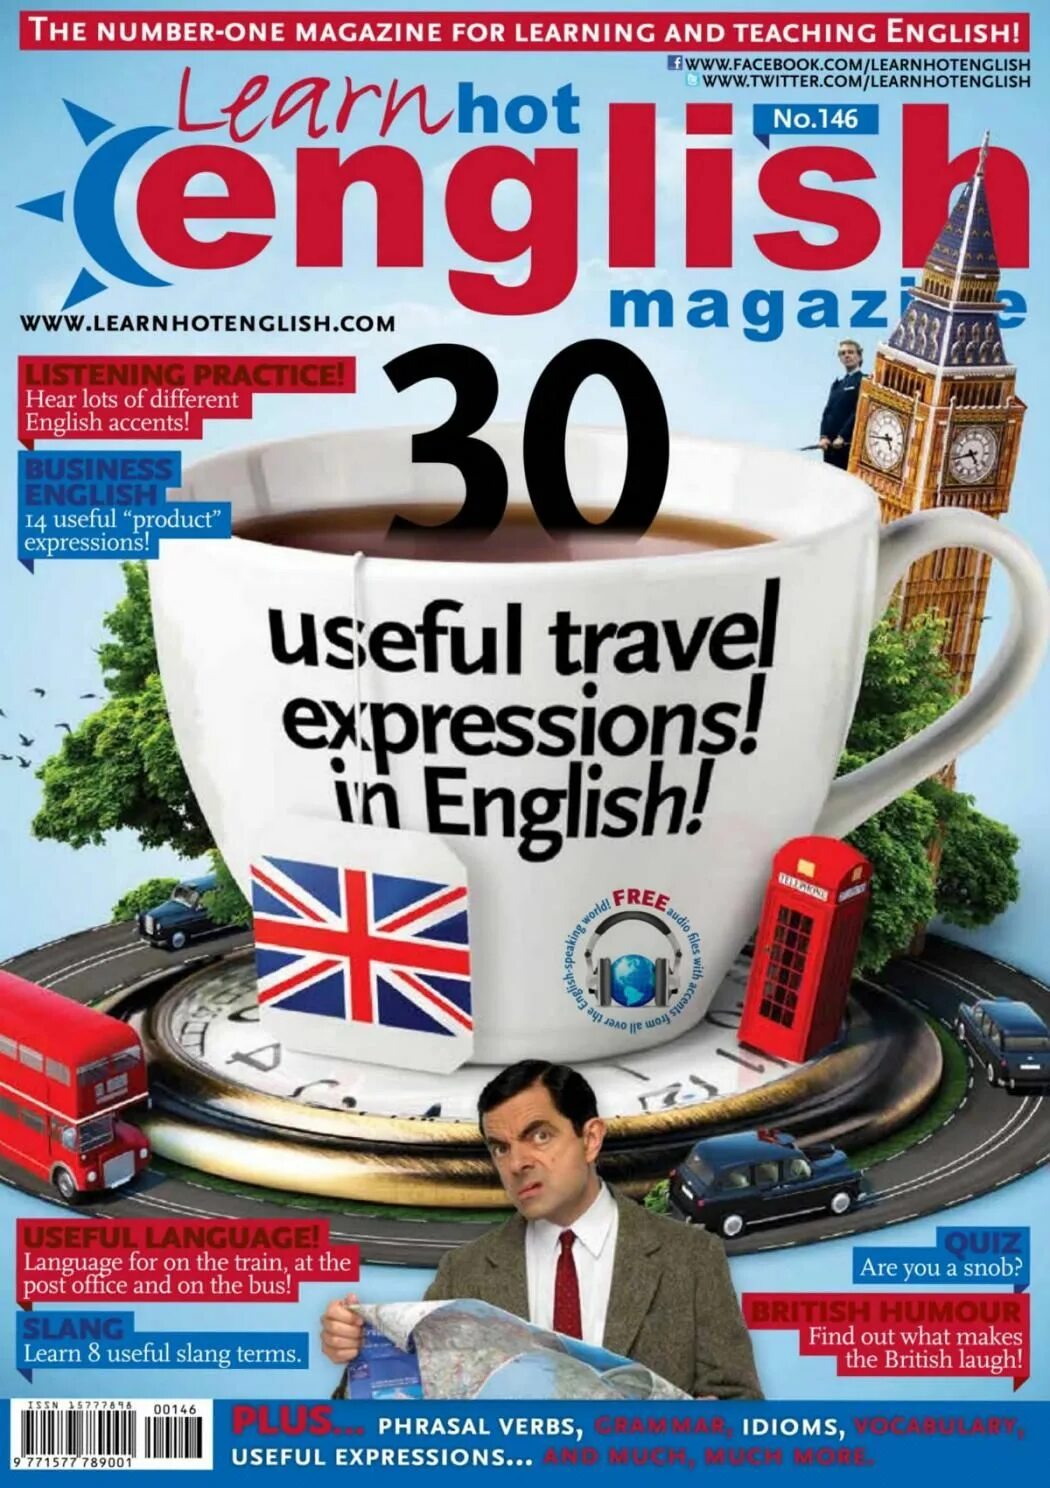 Magazines in english. Английские журналы. Журнал English. Журнал на английском языке. Английские журналы на английском.